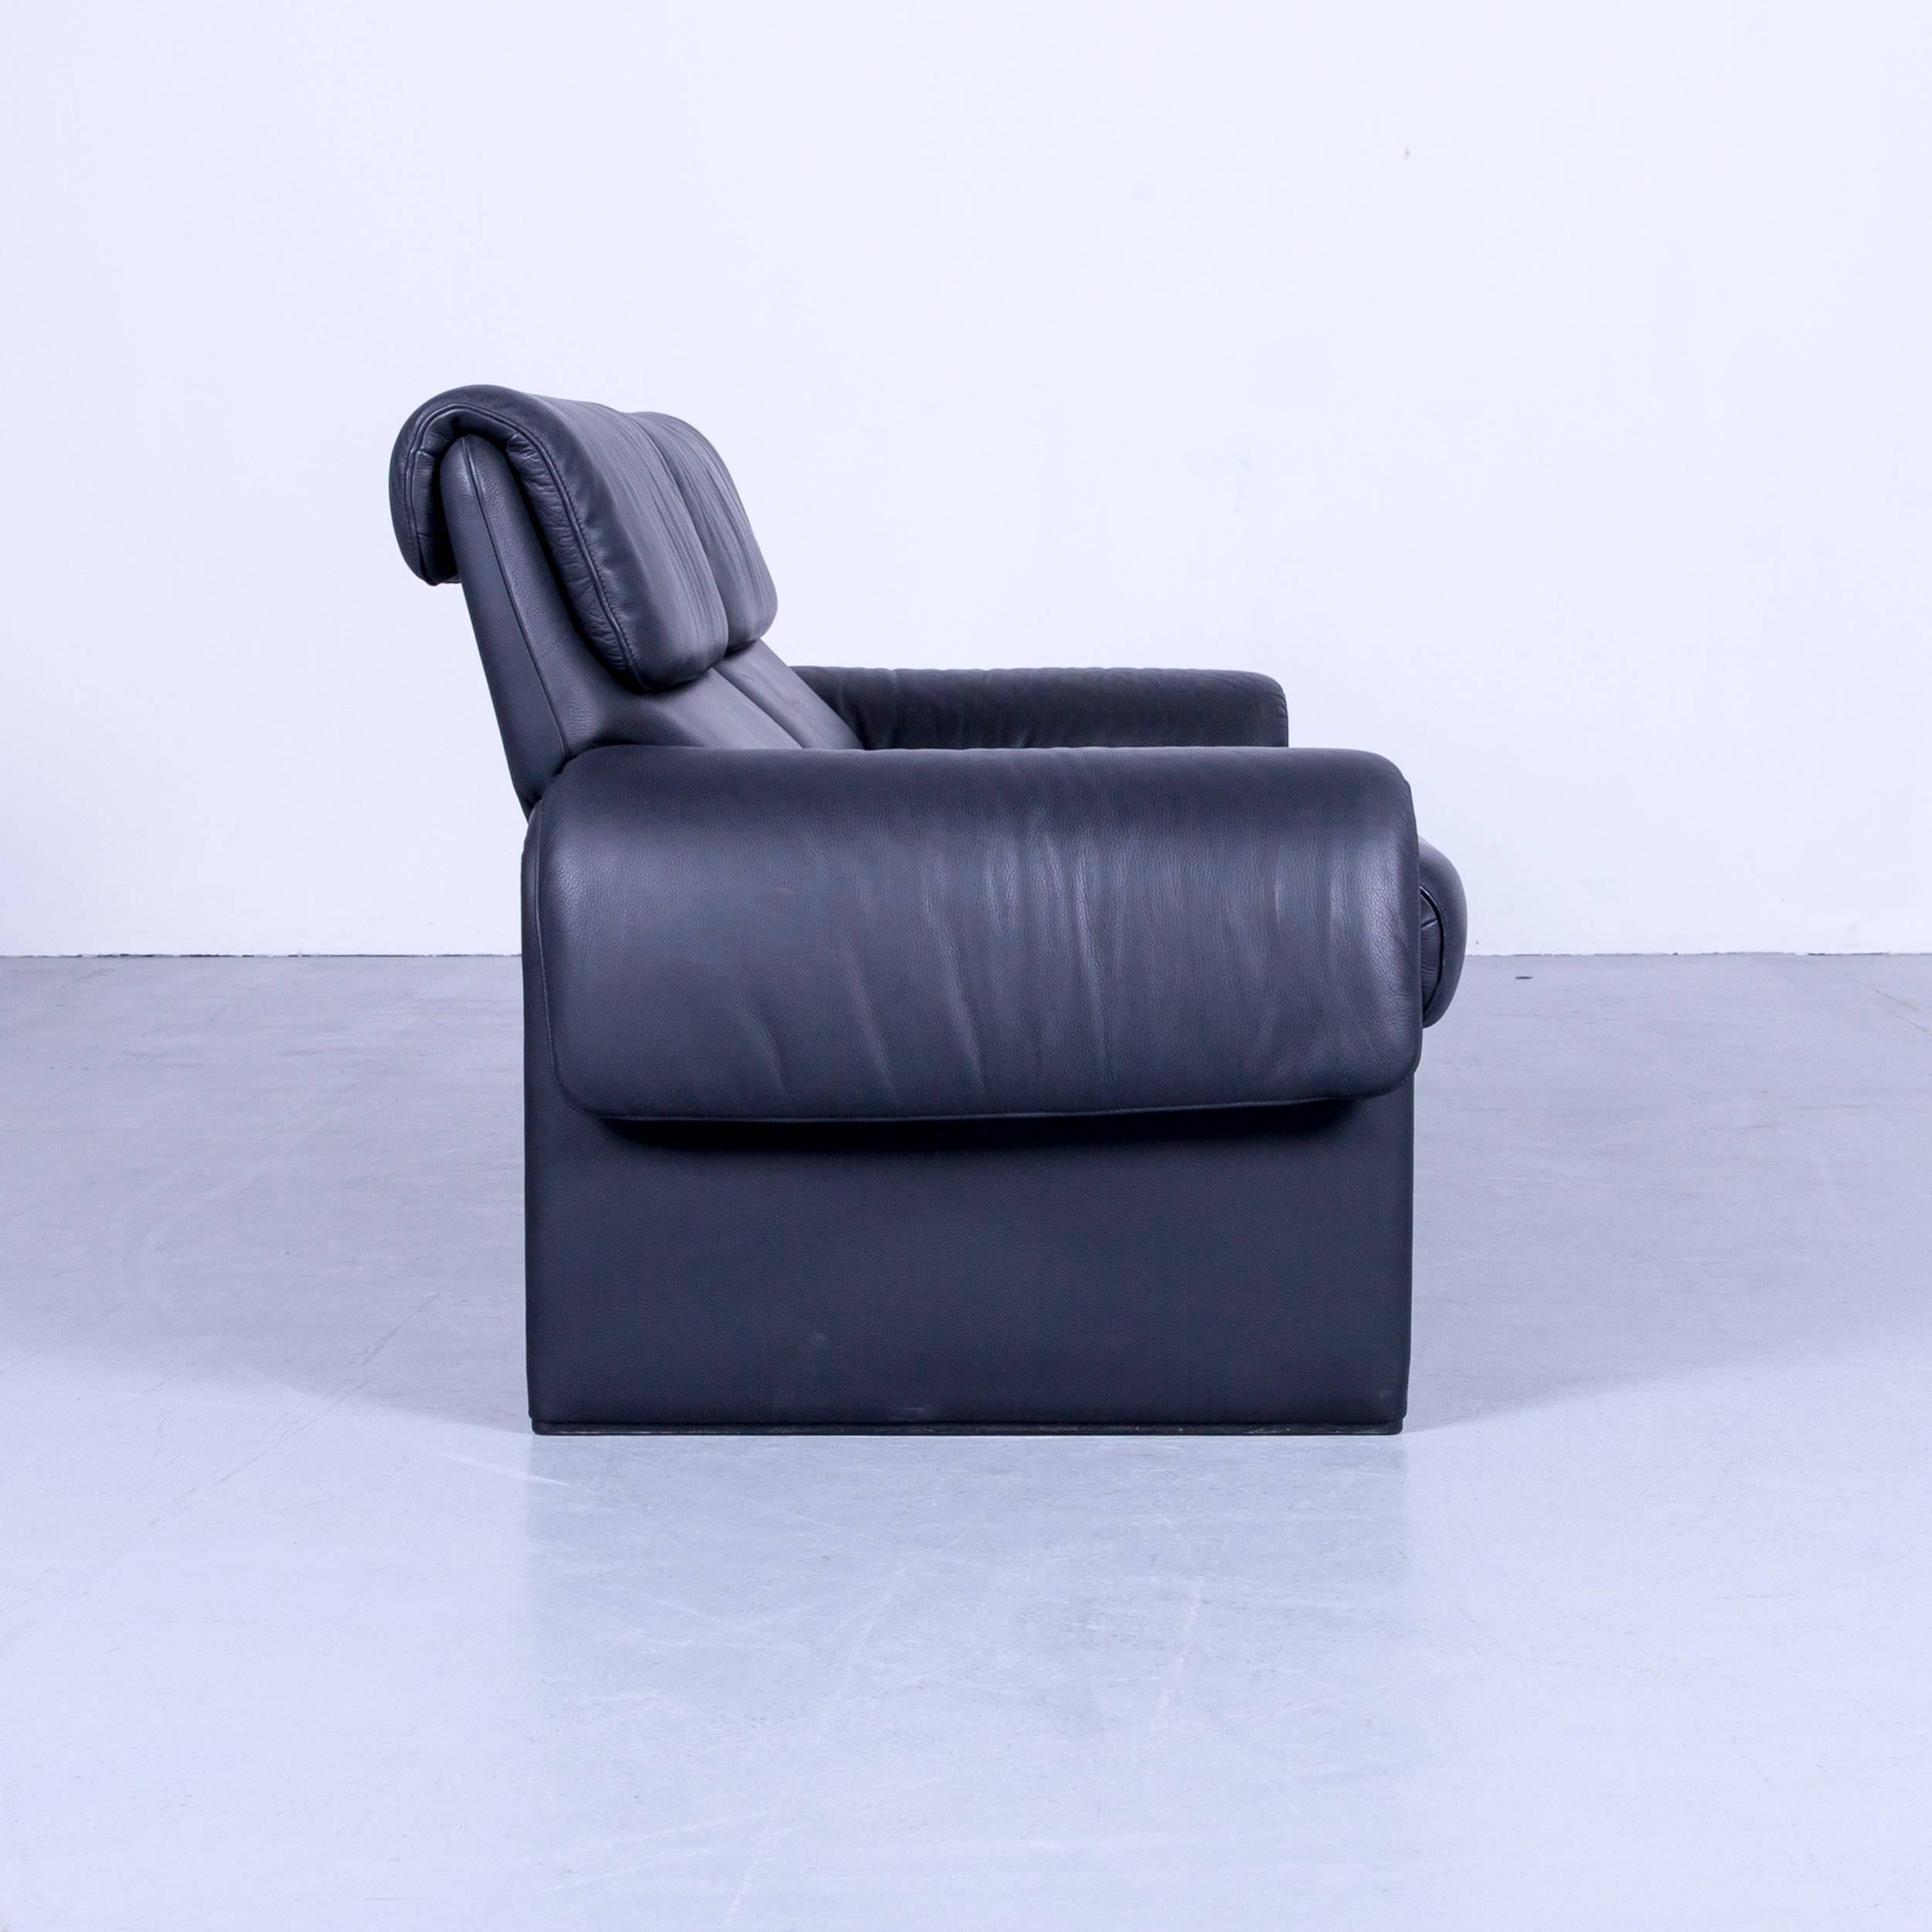 De Sede DS 2000 Designer Sofa Black Leather Relax Function Couch Switzerland 6